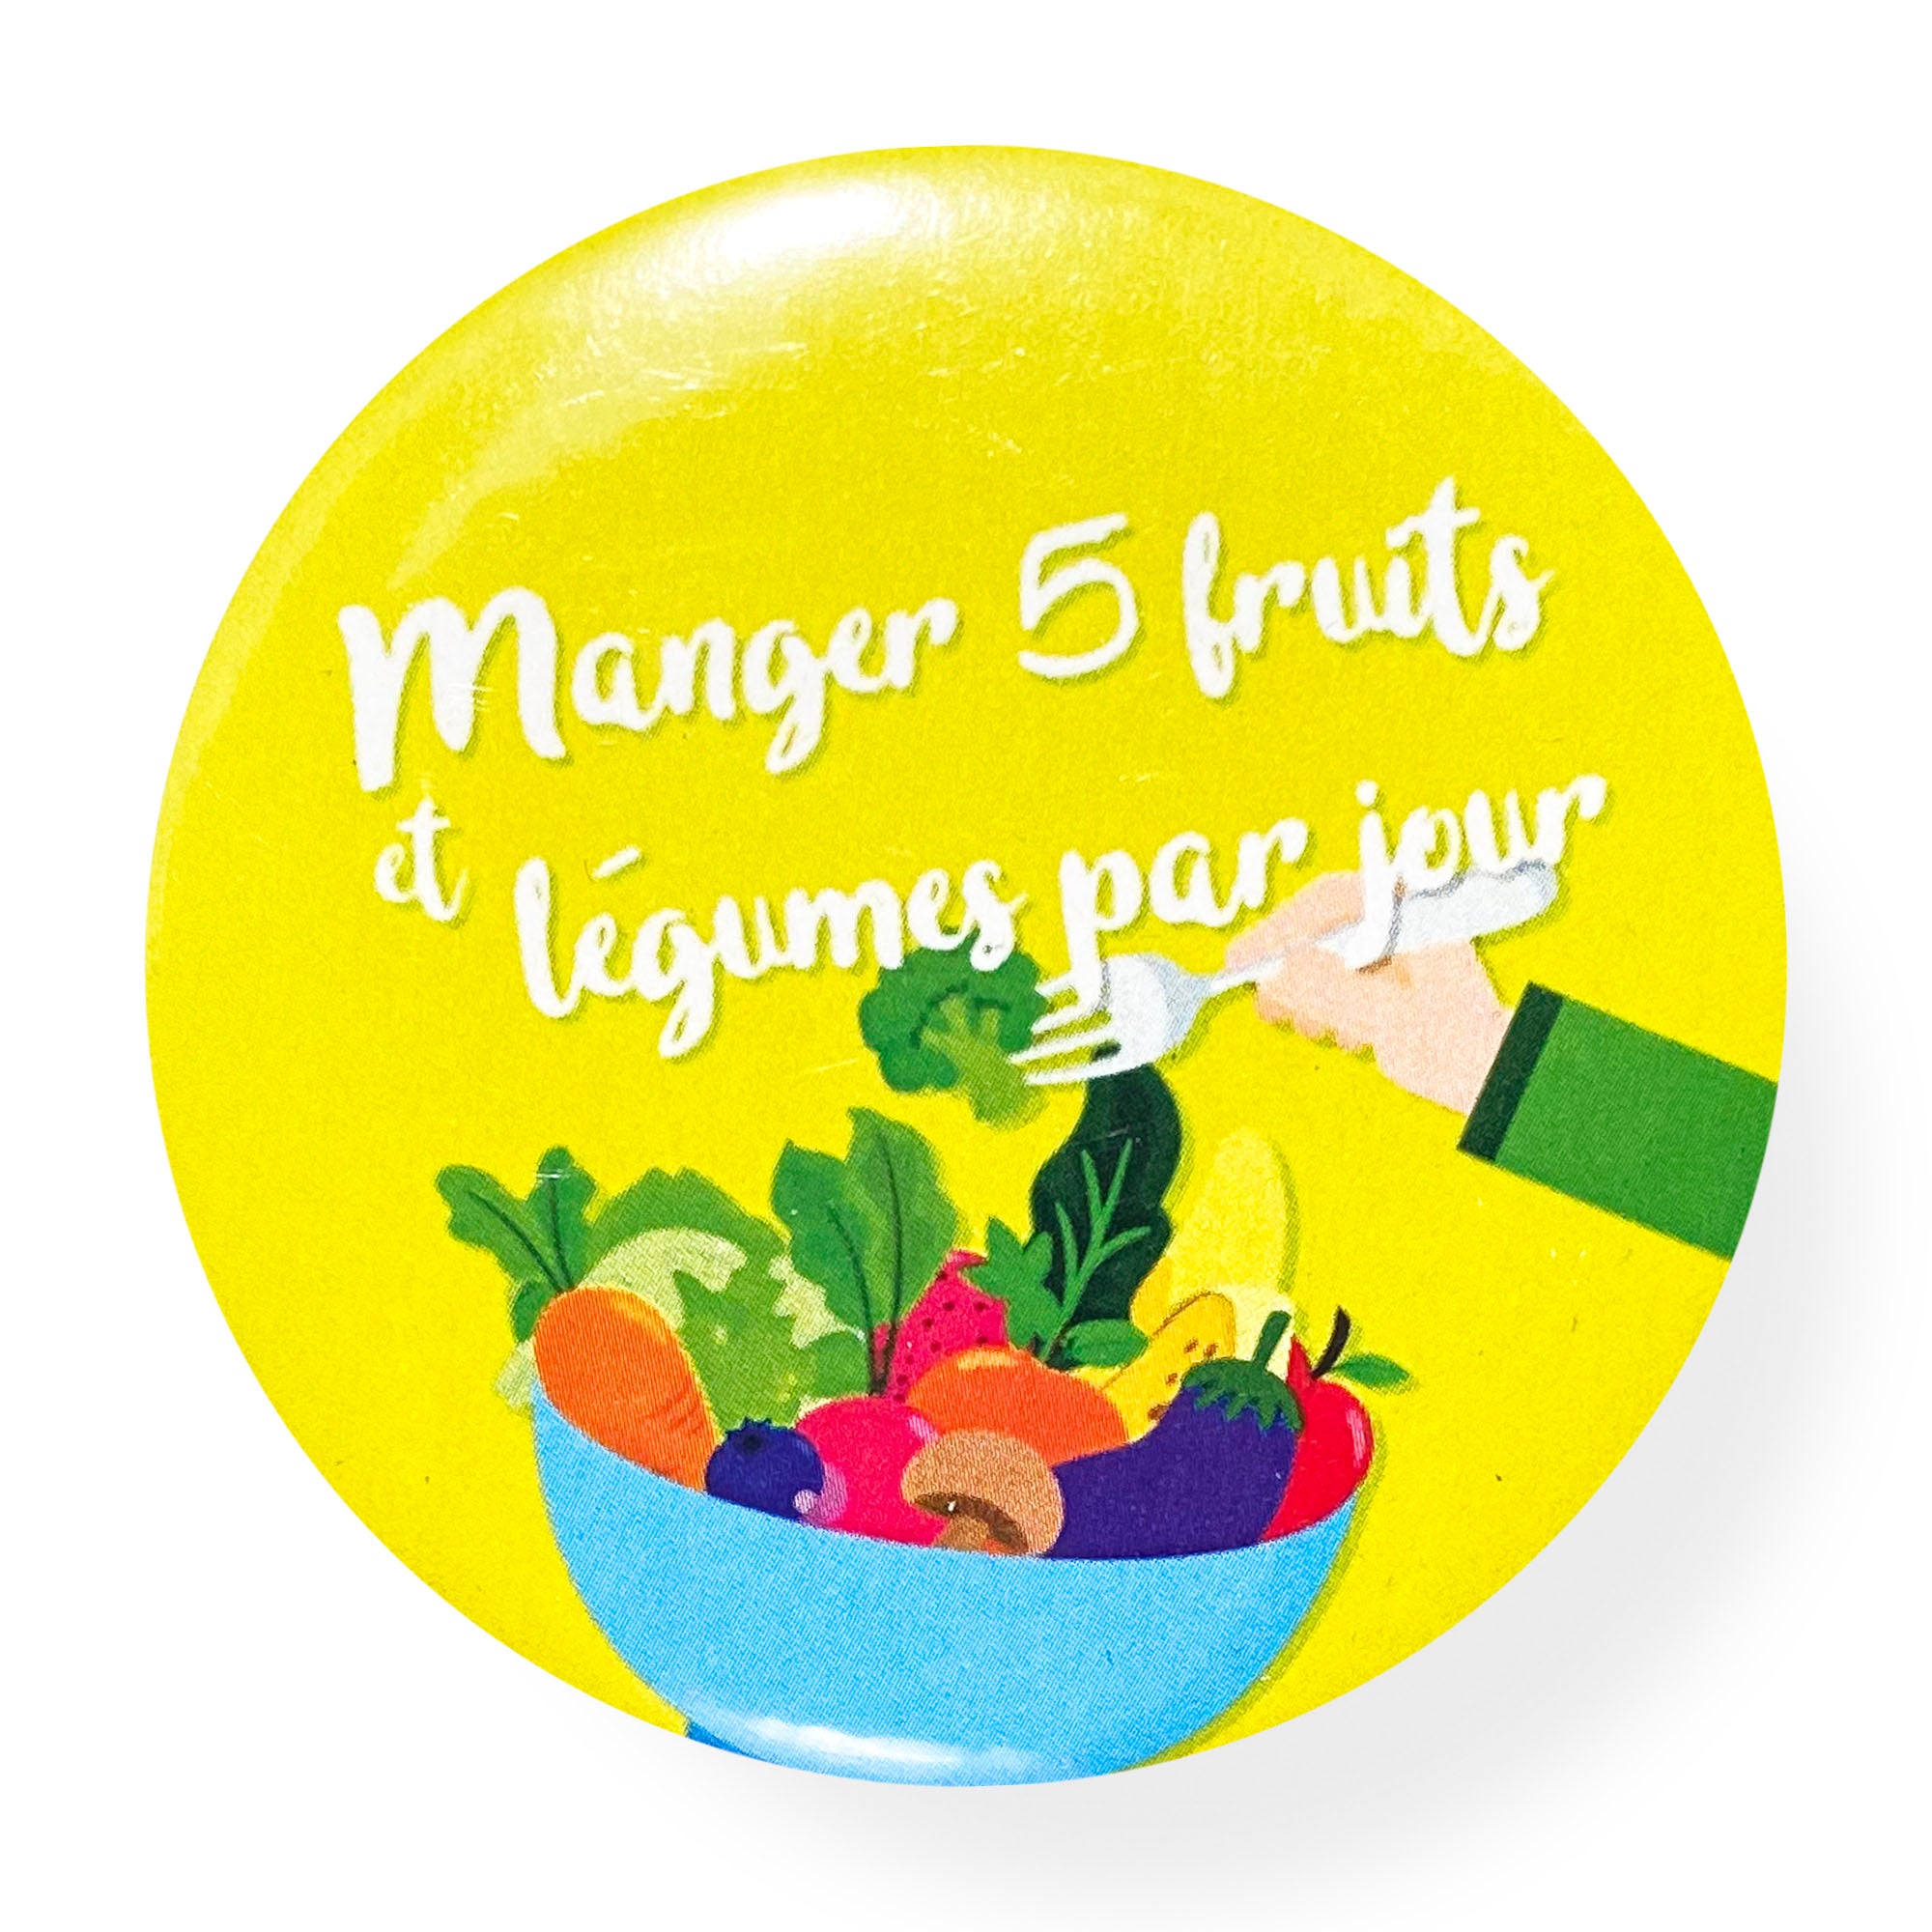 Veggies & Fruits Magnet - مغناطيس خضروات وفواكه